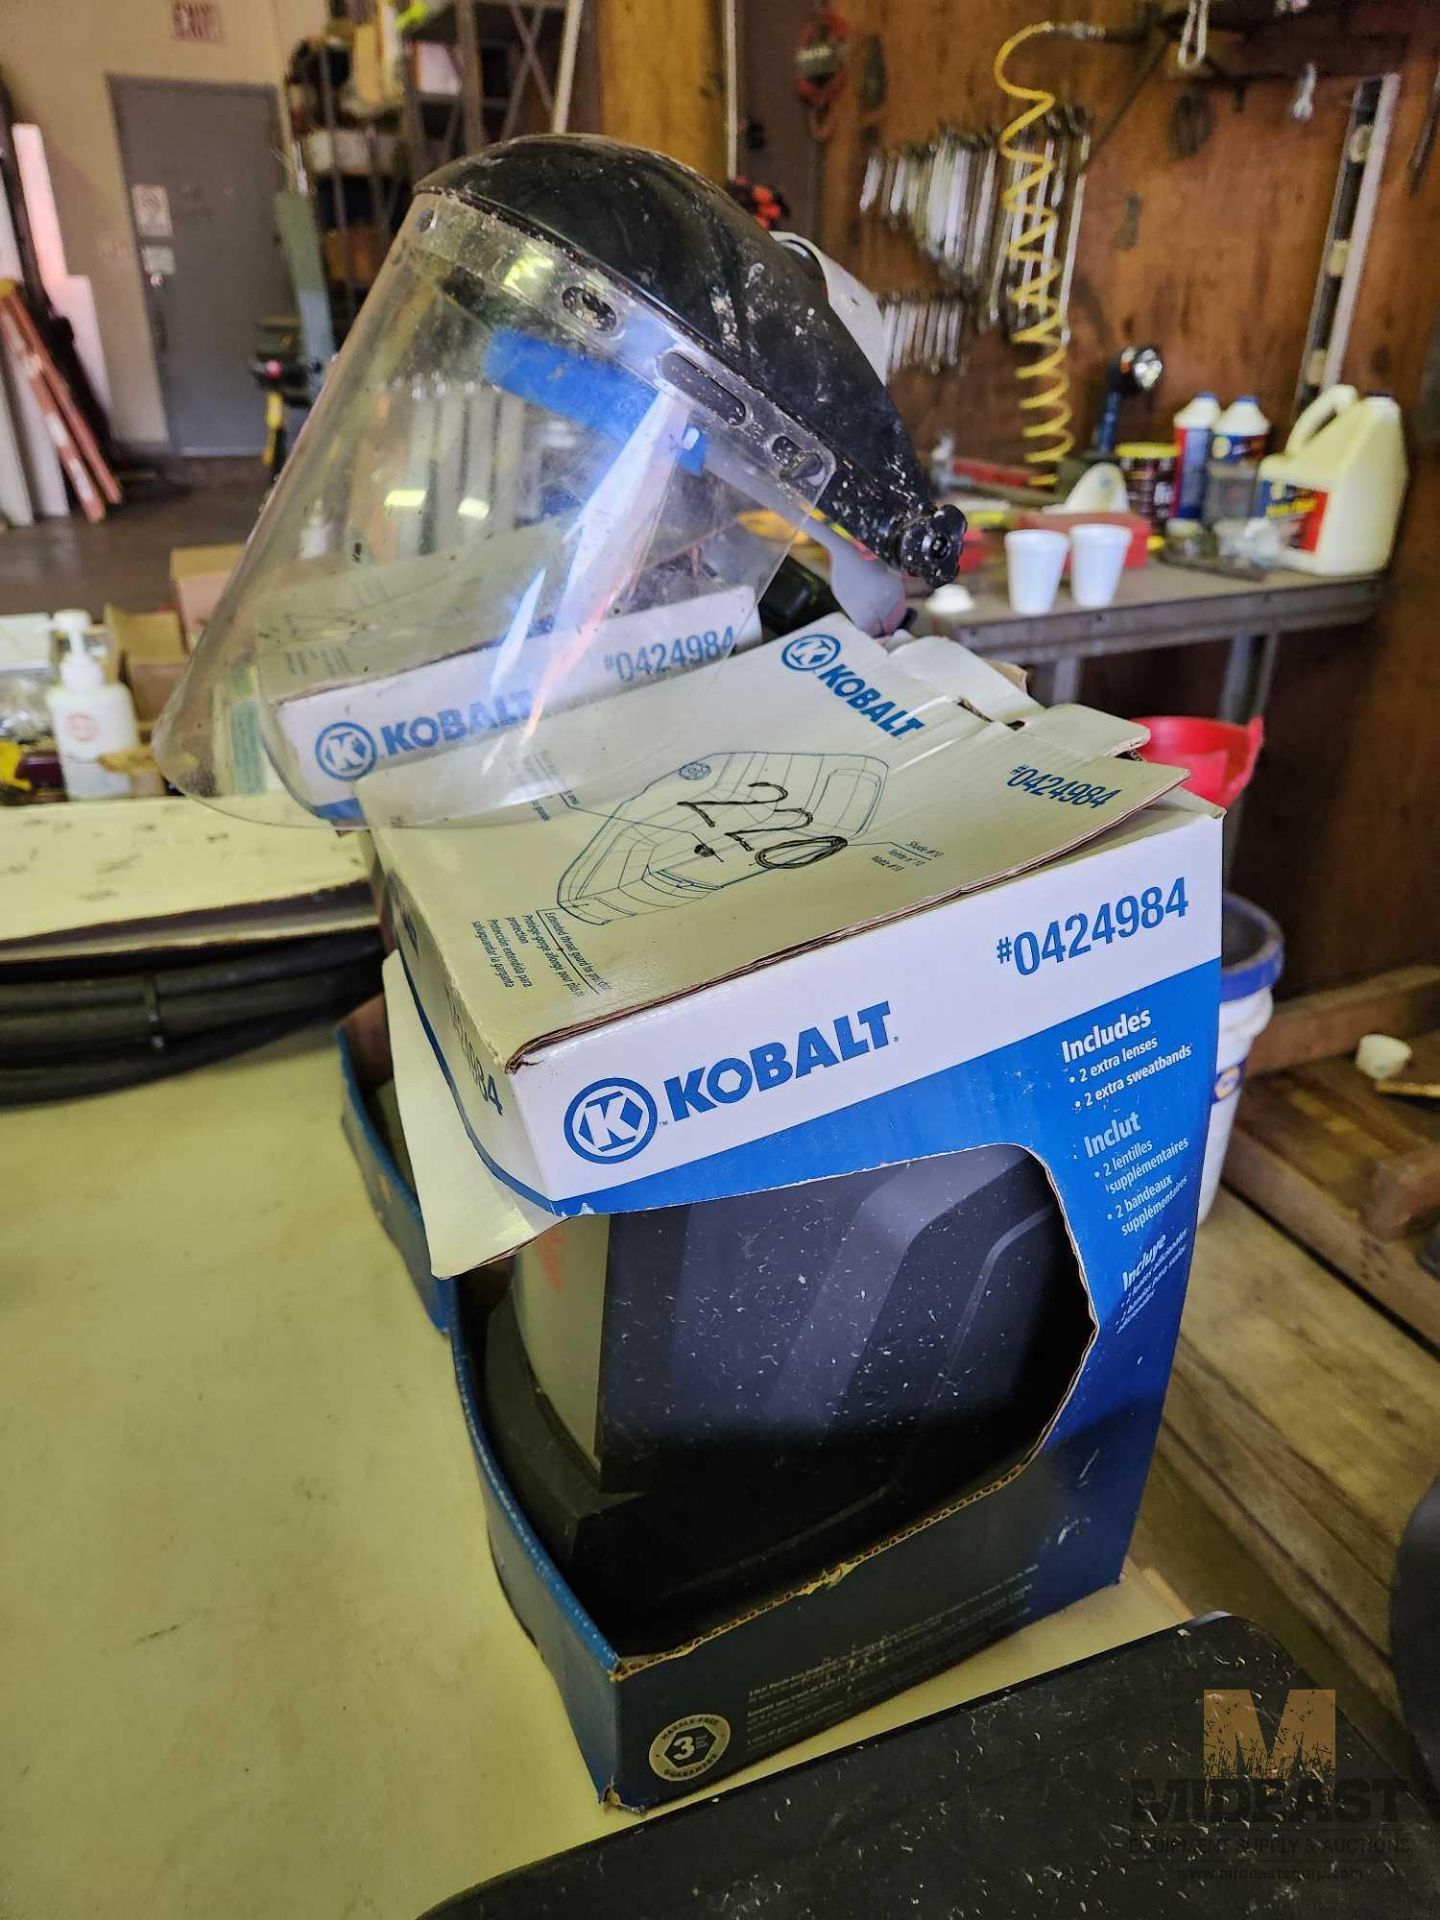 2 Kobalt Welding Helmets - Image 2 of 2